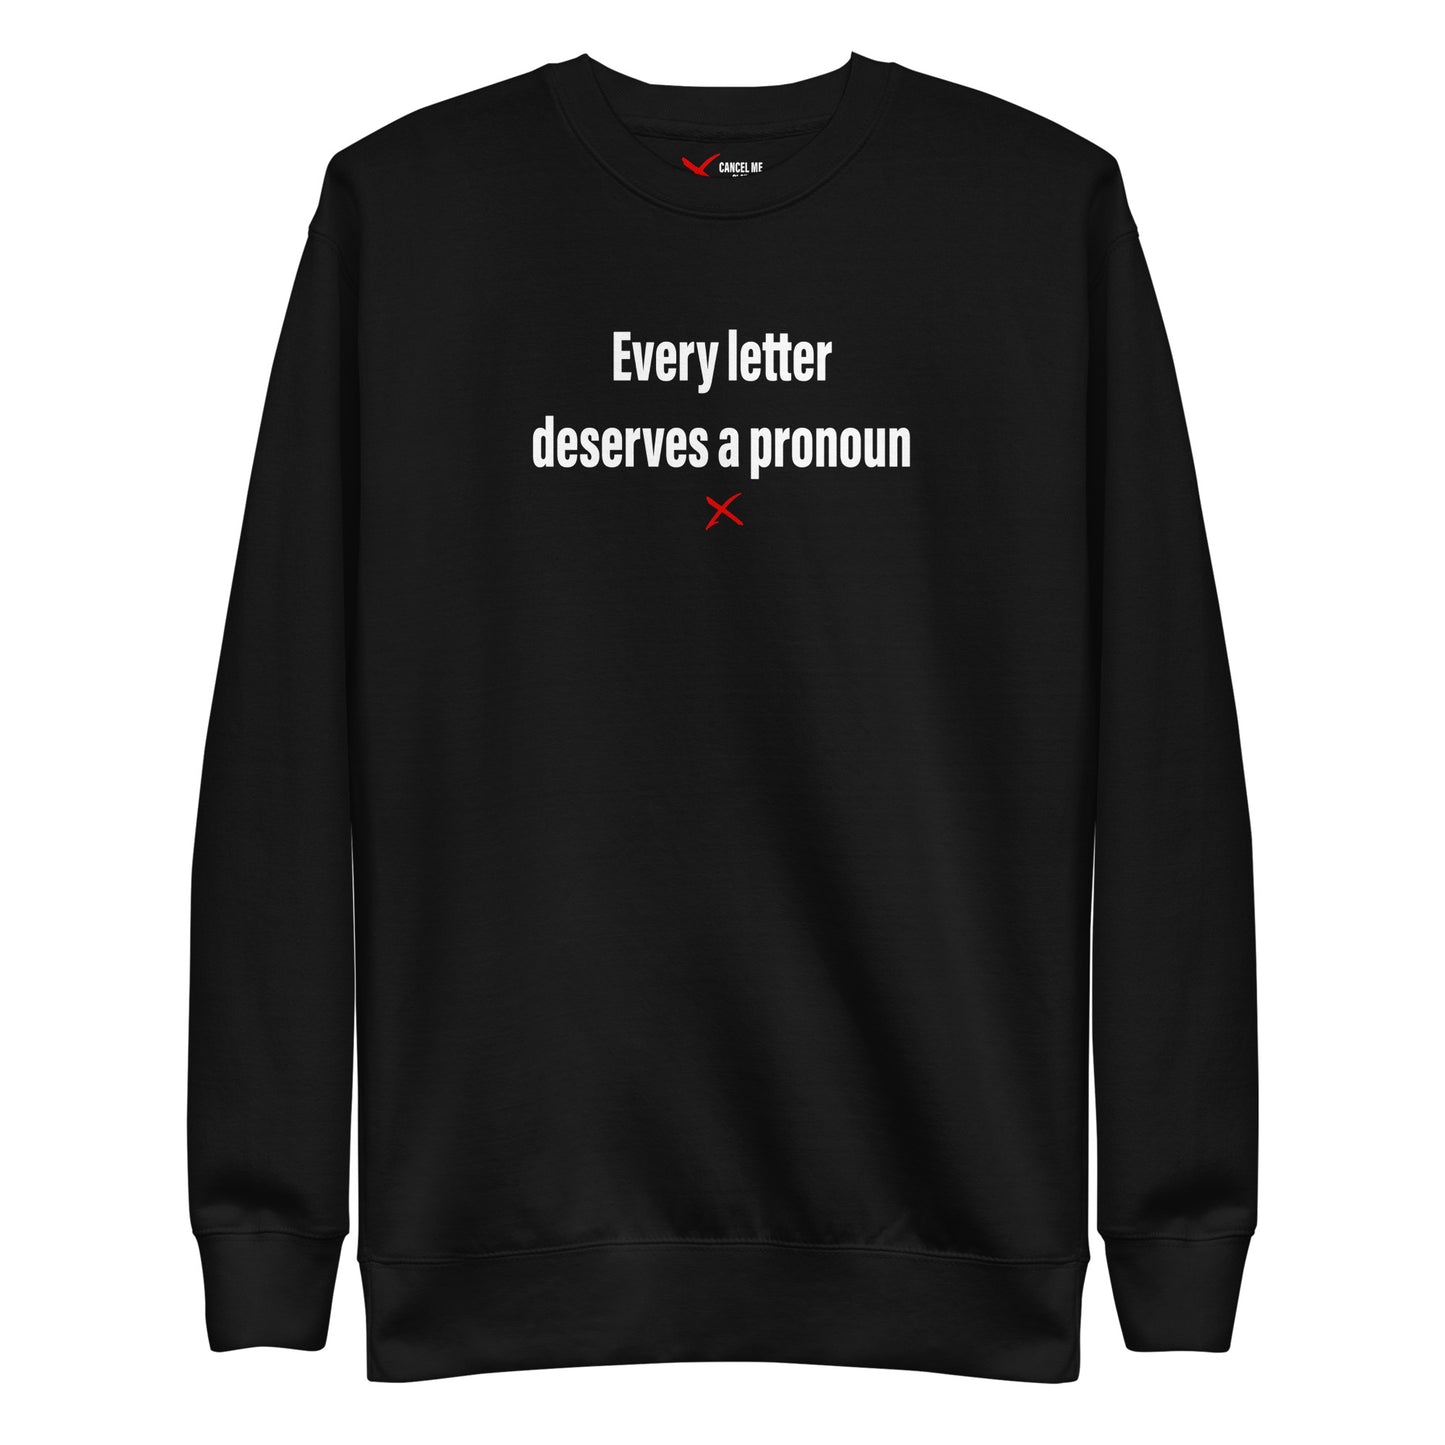 Every letter deserves a pronoun - Sweatshirt